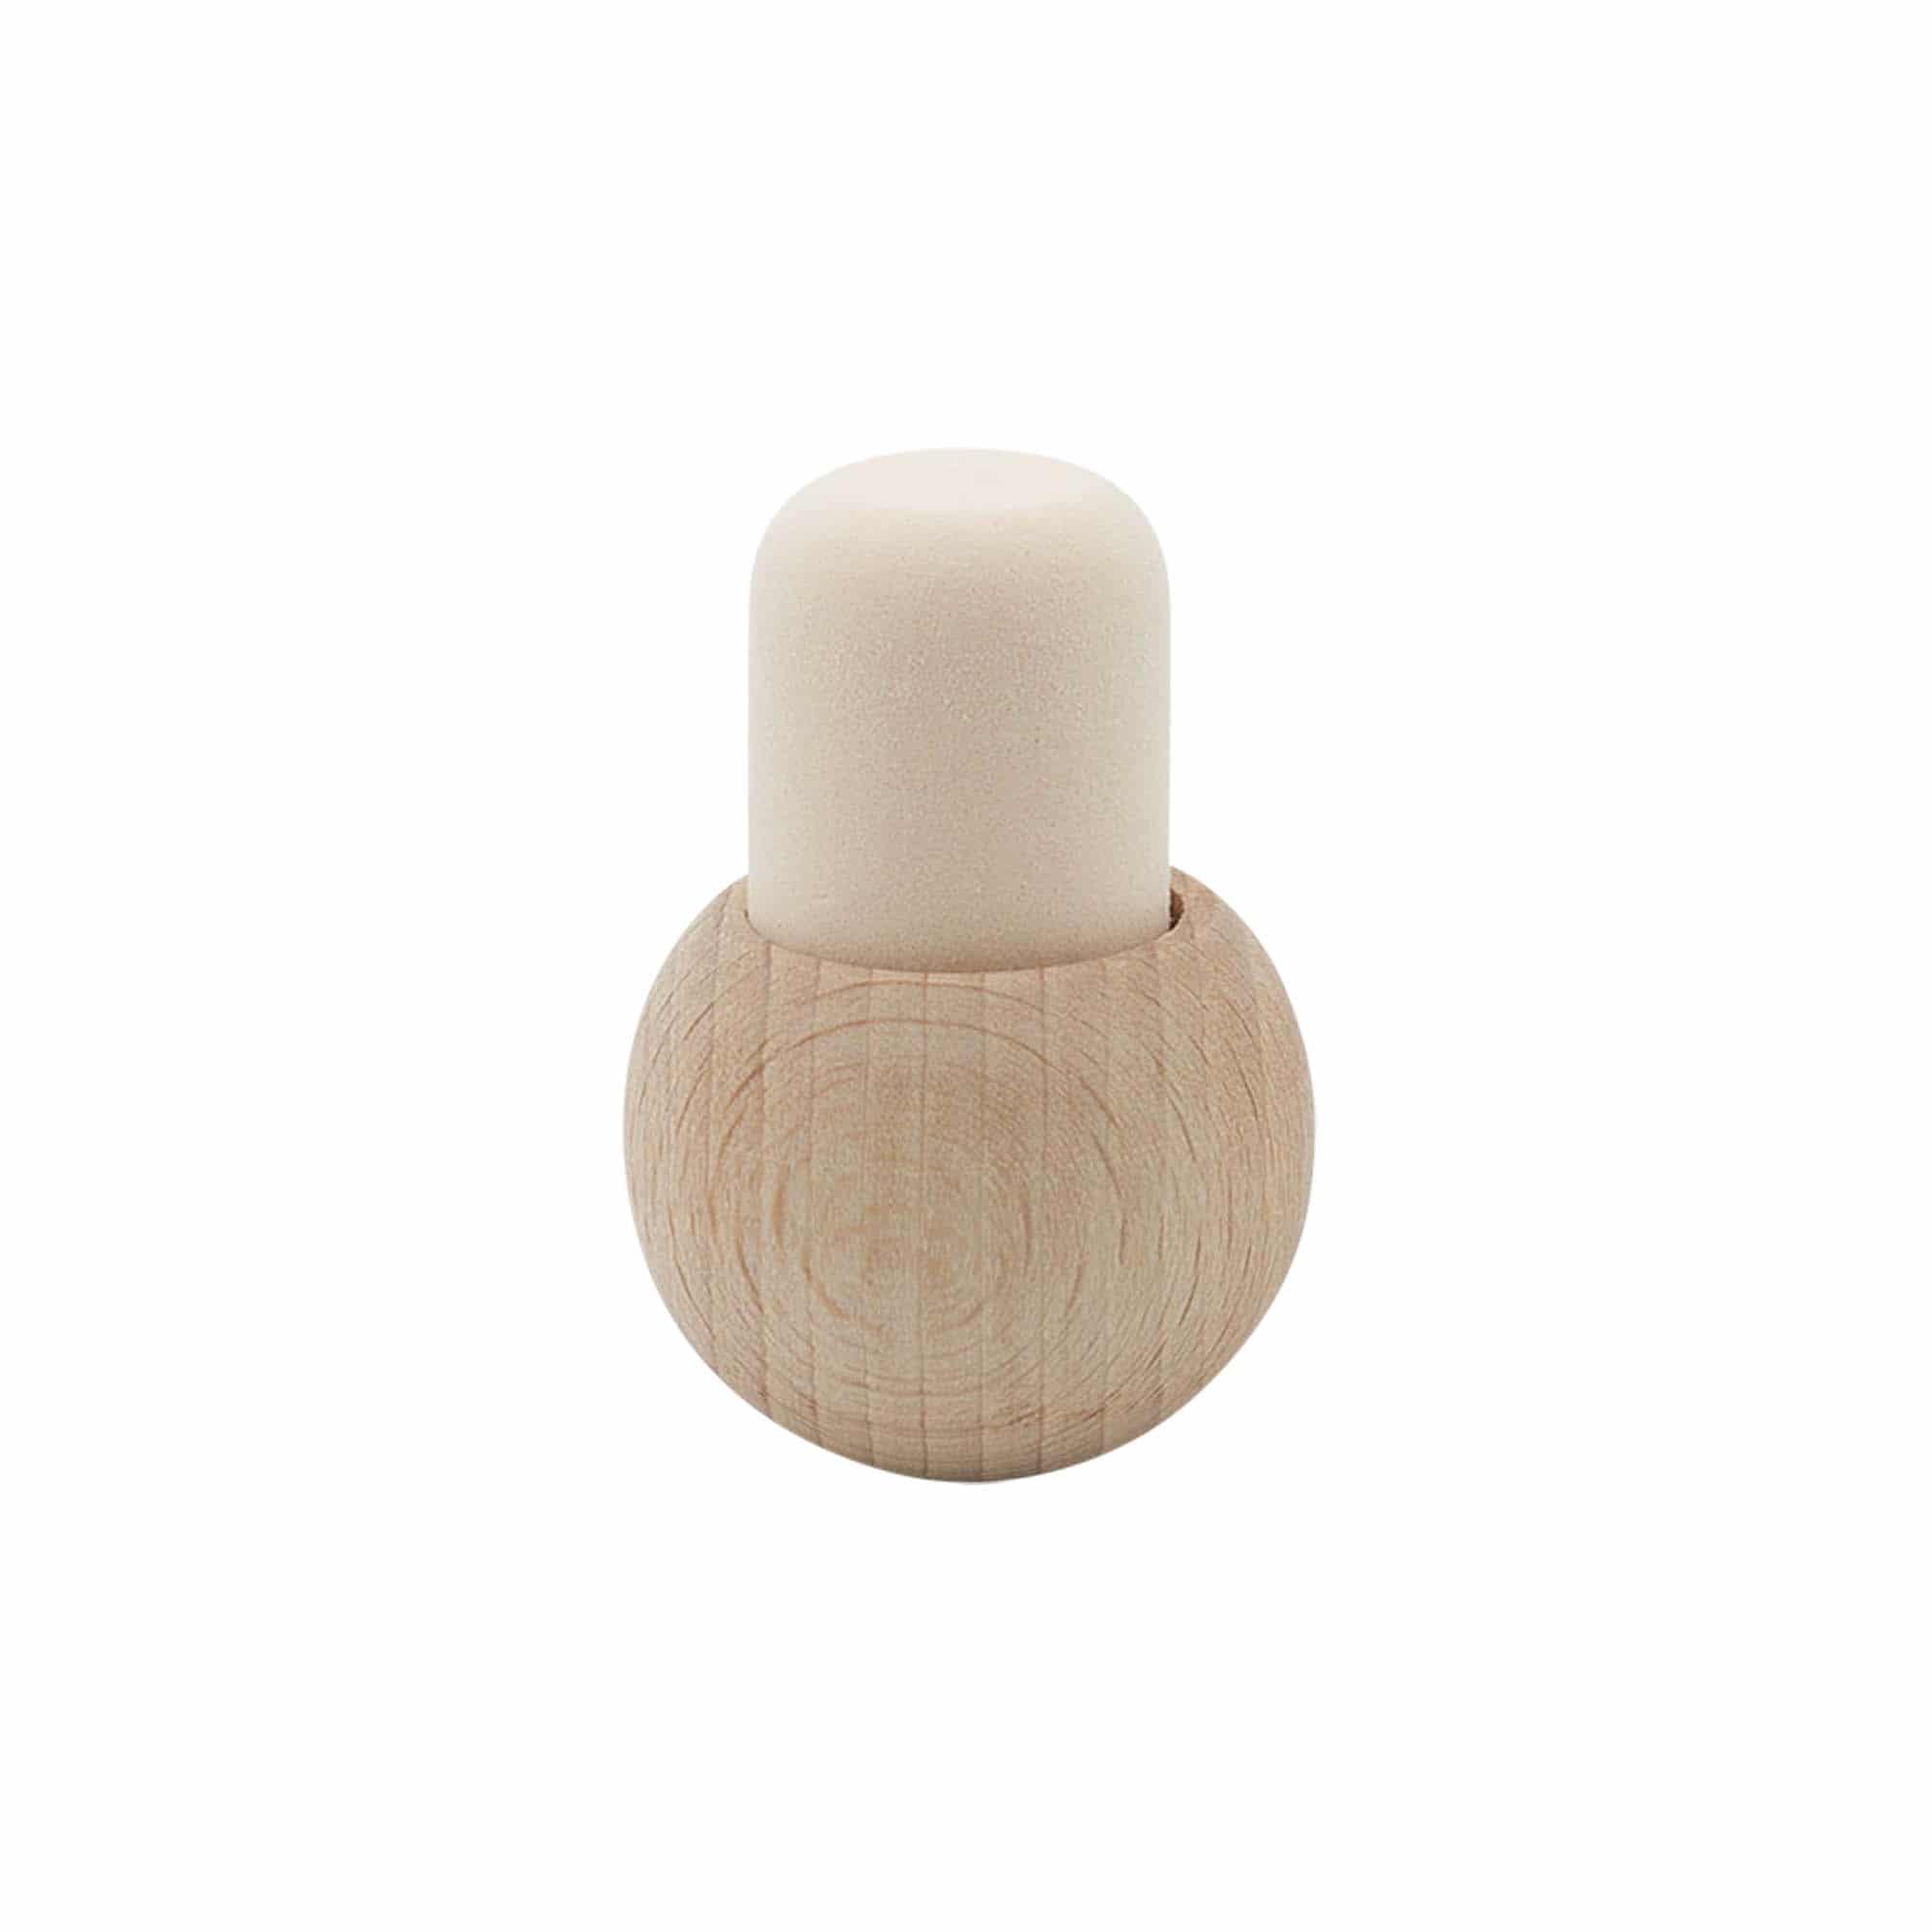 19 mm mushroom cork 'Sphere', wood, for opening: cork